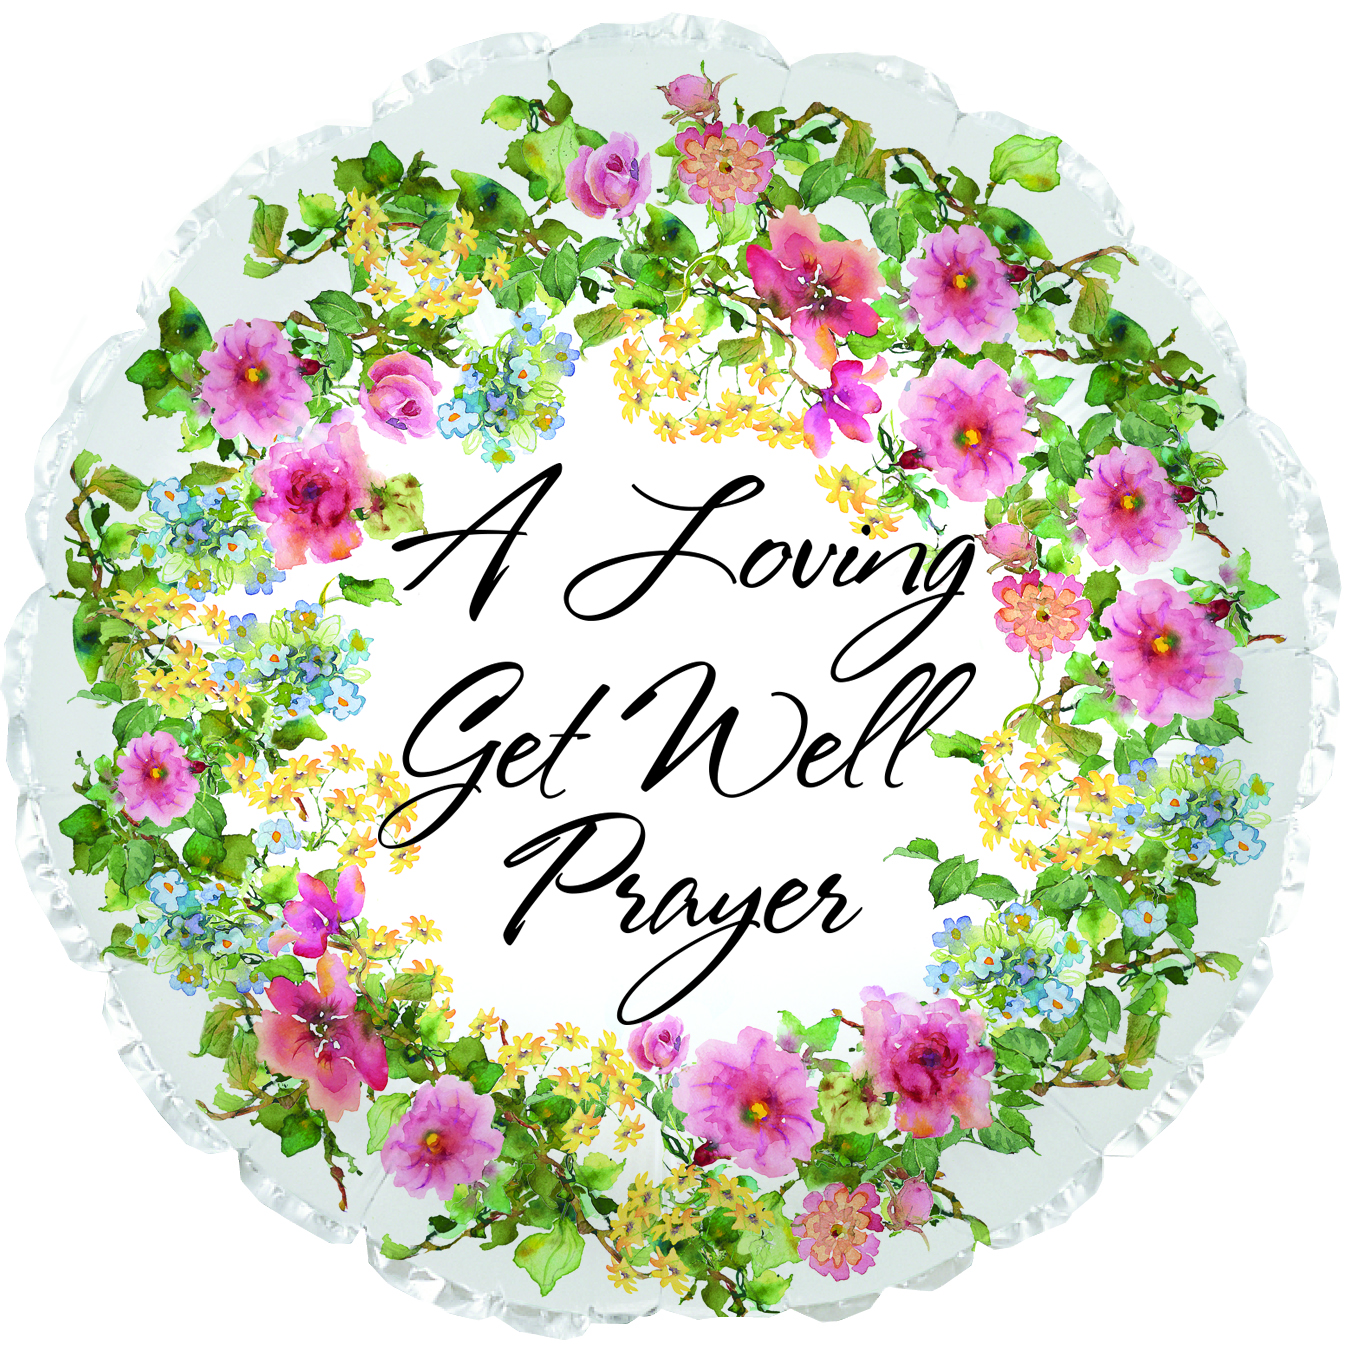 A Loving Floral Prayer